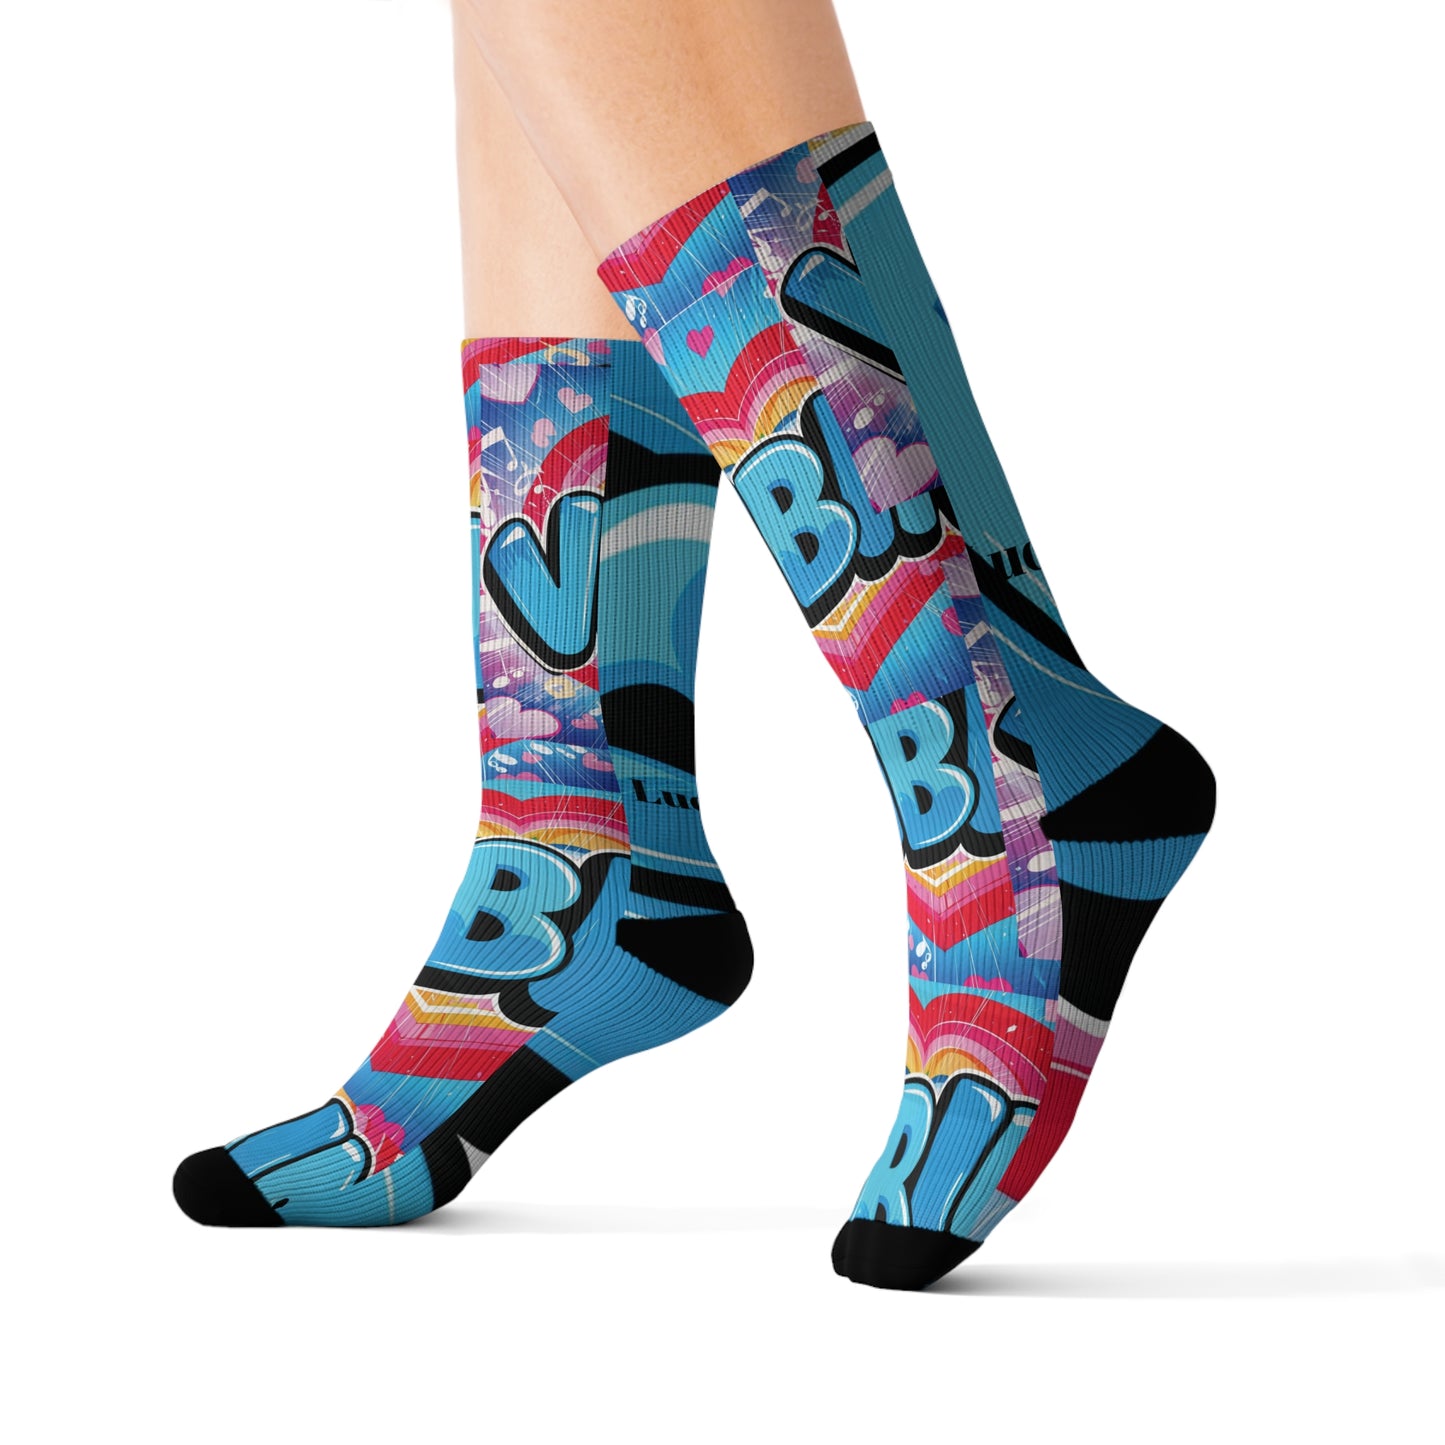 Lucas Wear New Releases Sublimation Socks